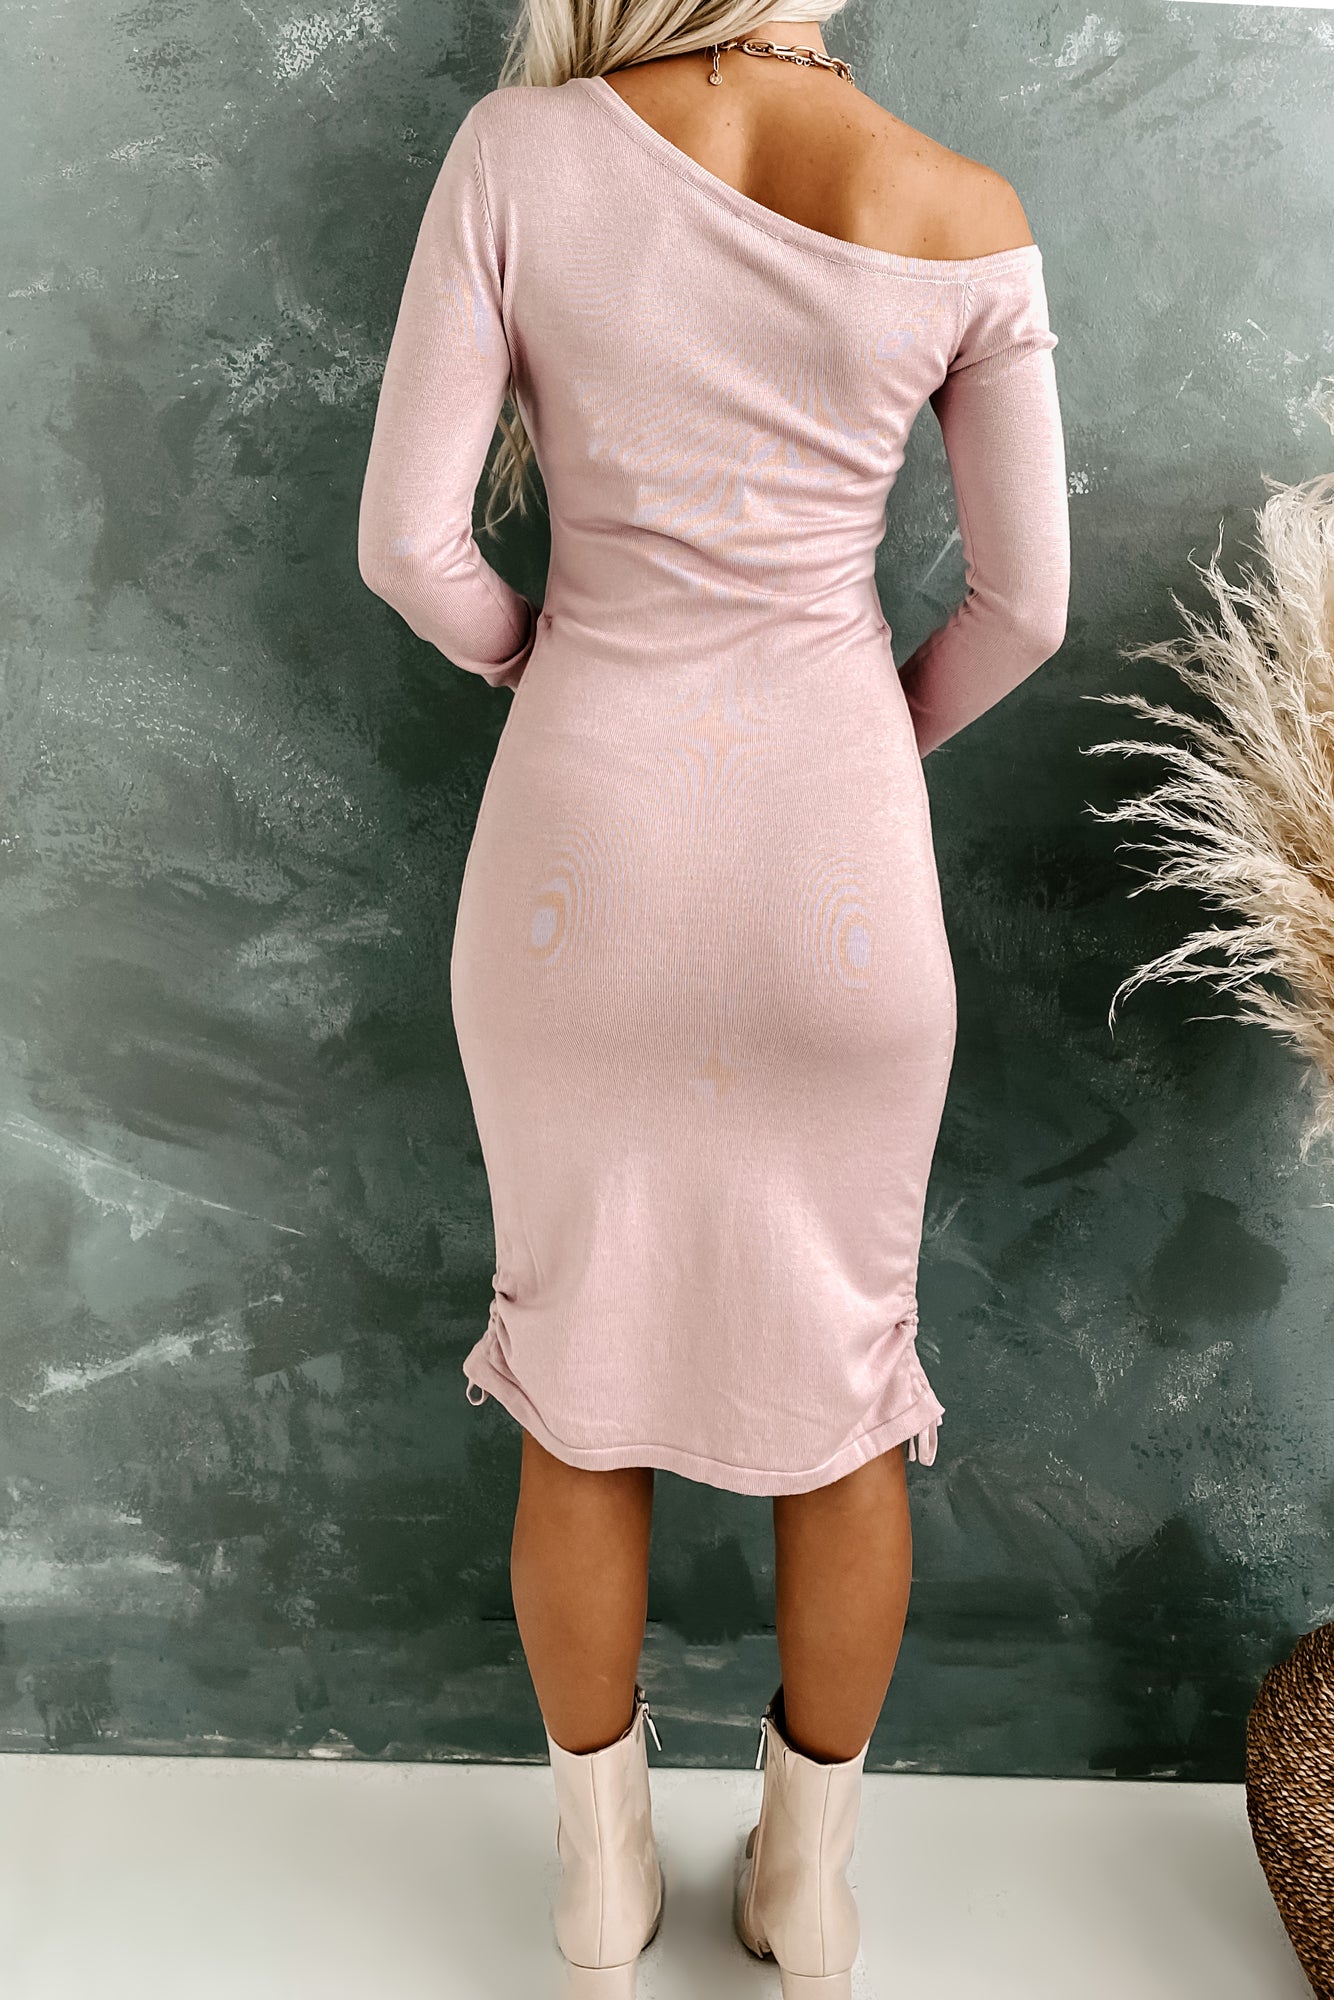 Exacting Standards One Shoulder Ruching Sweater Dress (Blush)